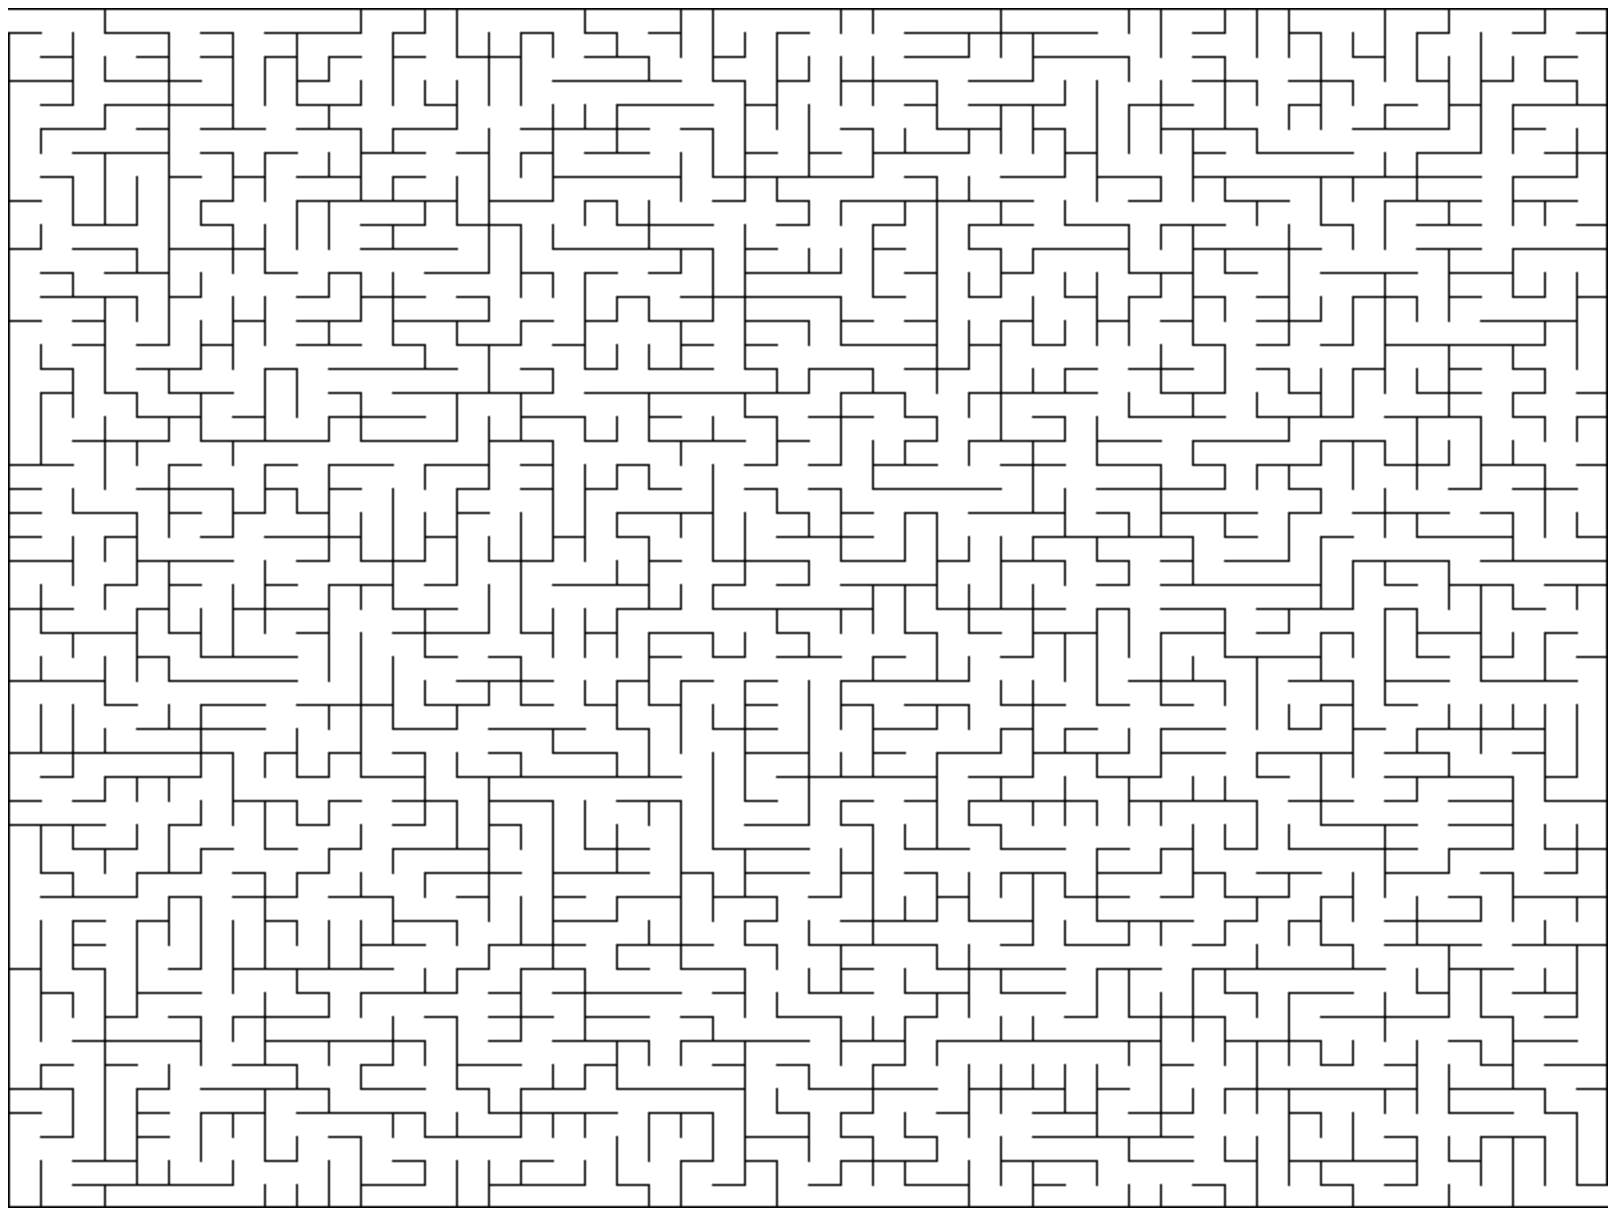 [Mazescapist]关于迷宫你所应该知道的一些事 - 哔哩哔哩